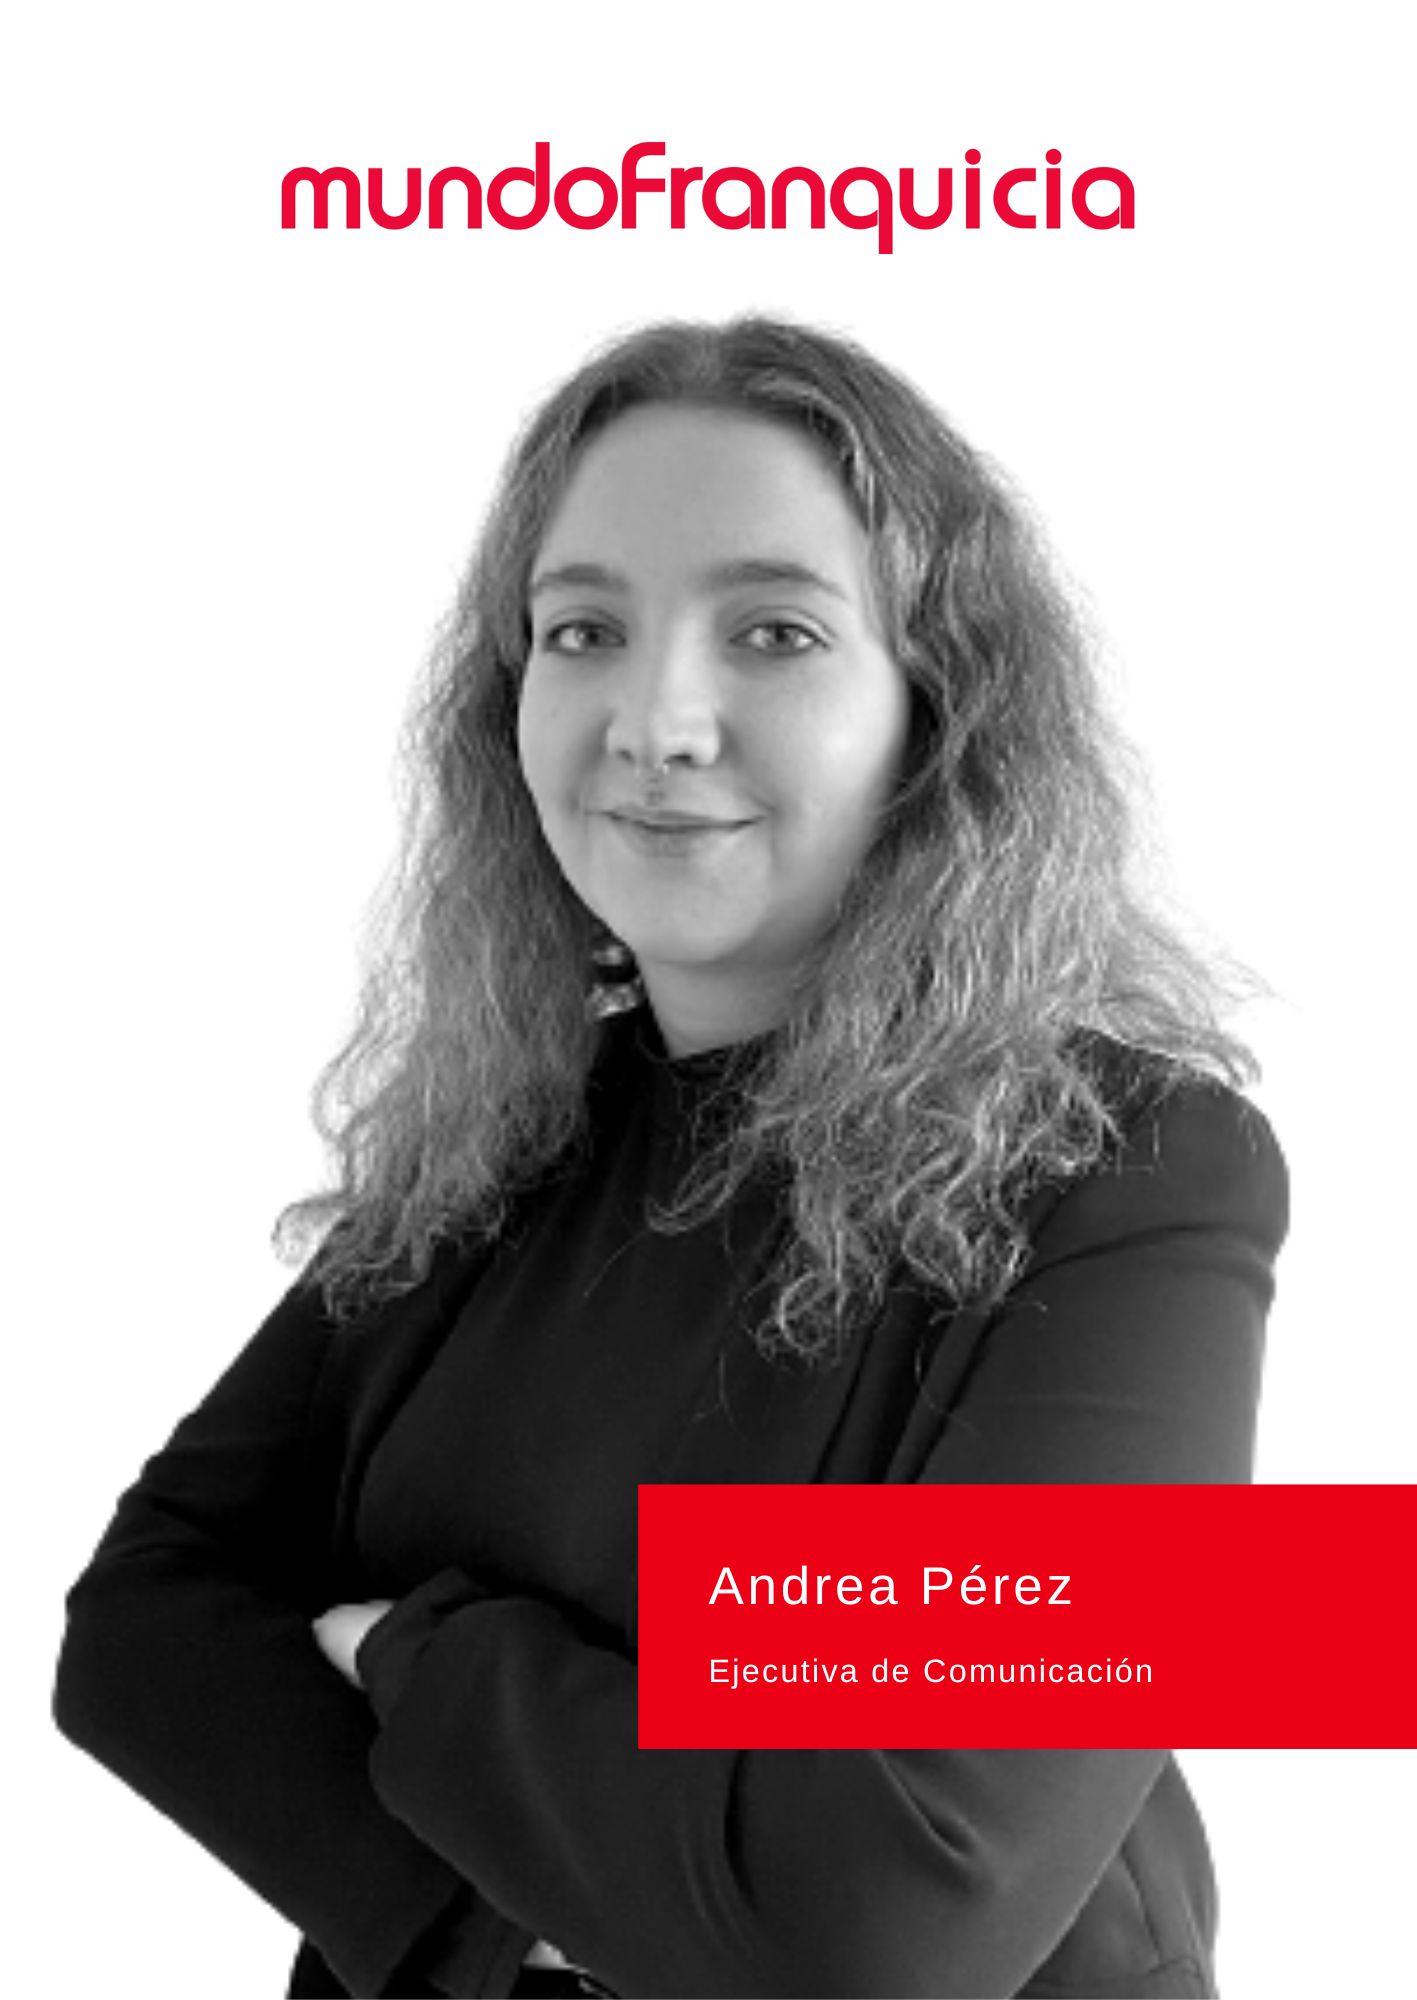 Andrea Pérez